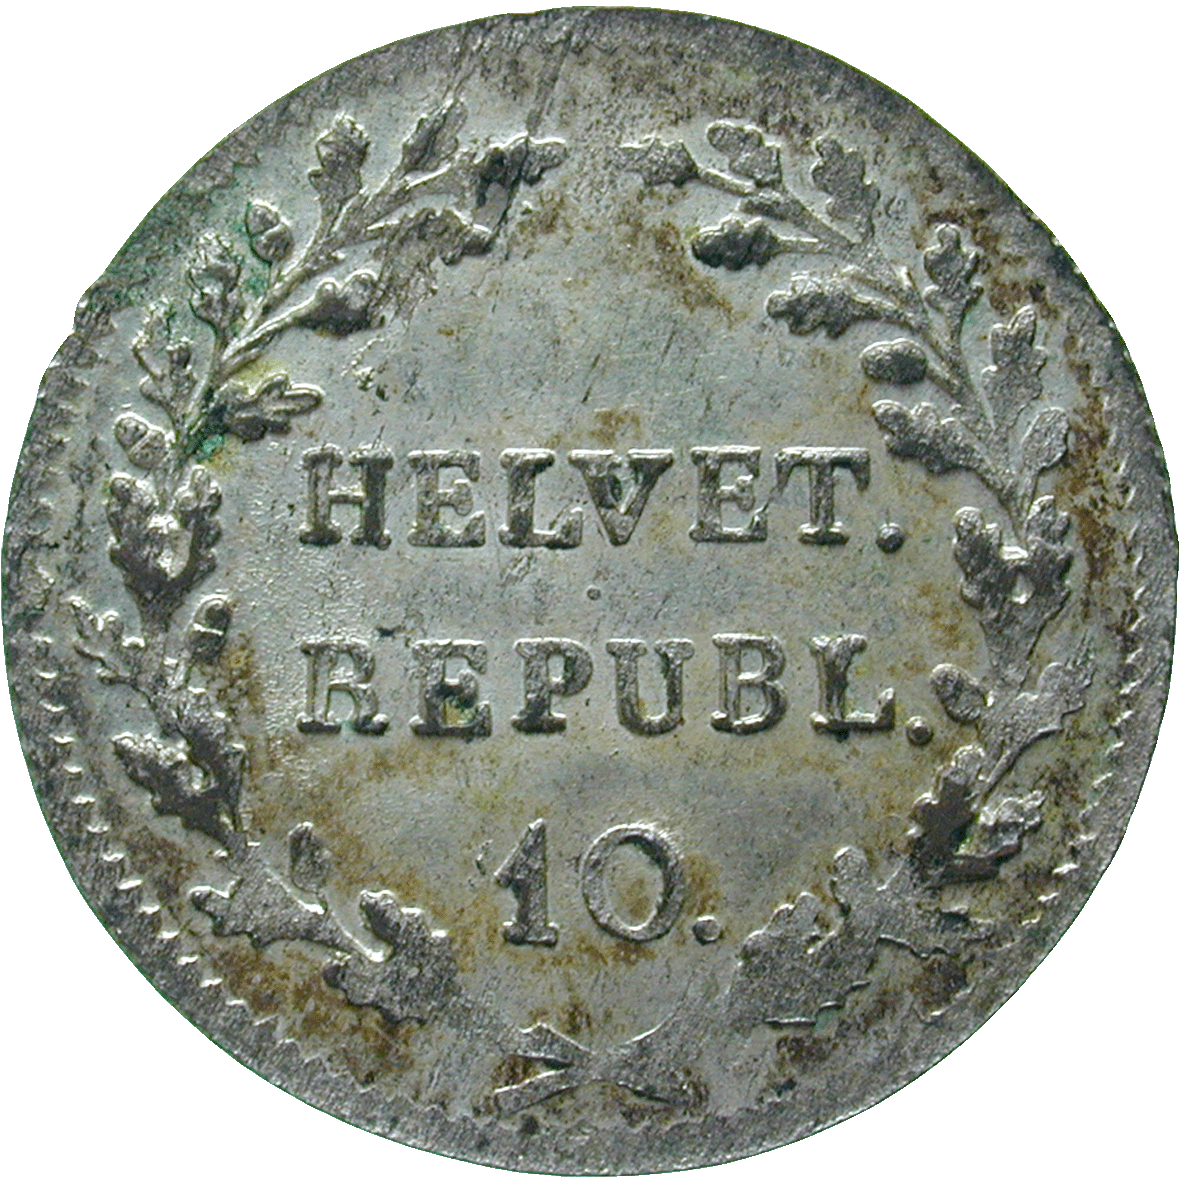 Helvetic Republic, 1 Batzen 1799 (obverse)